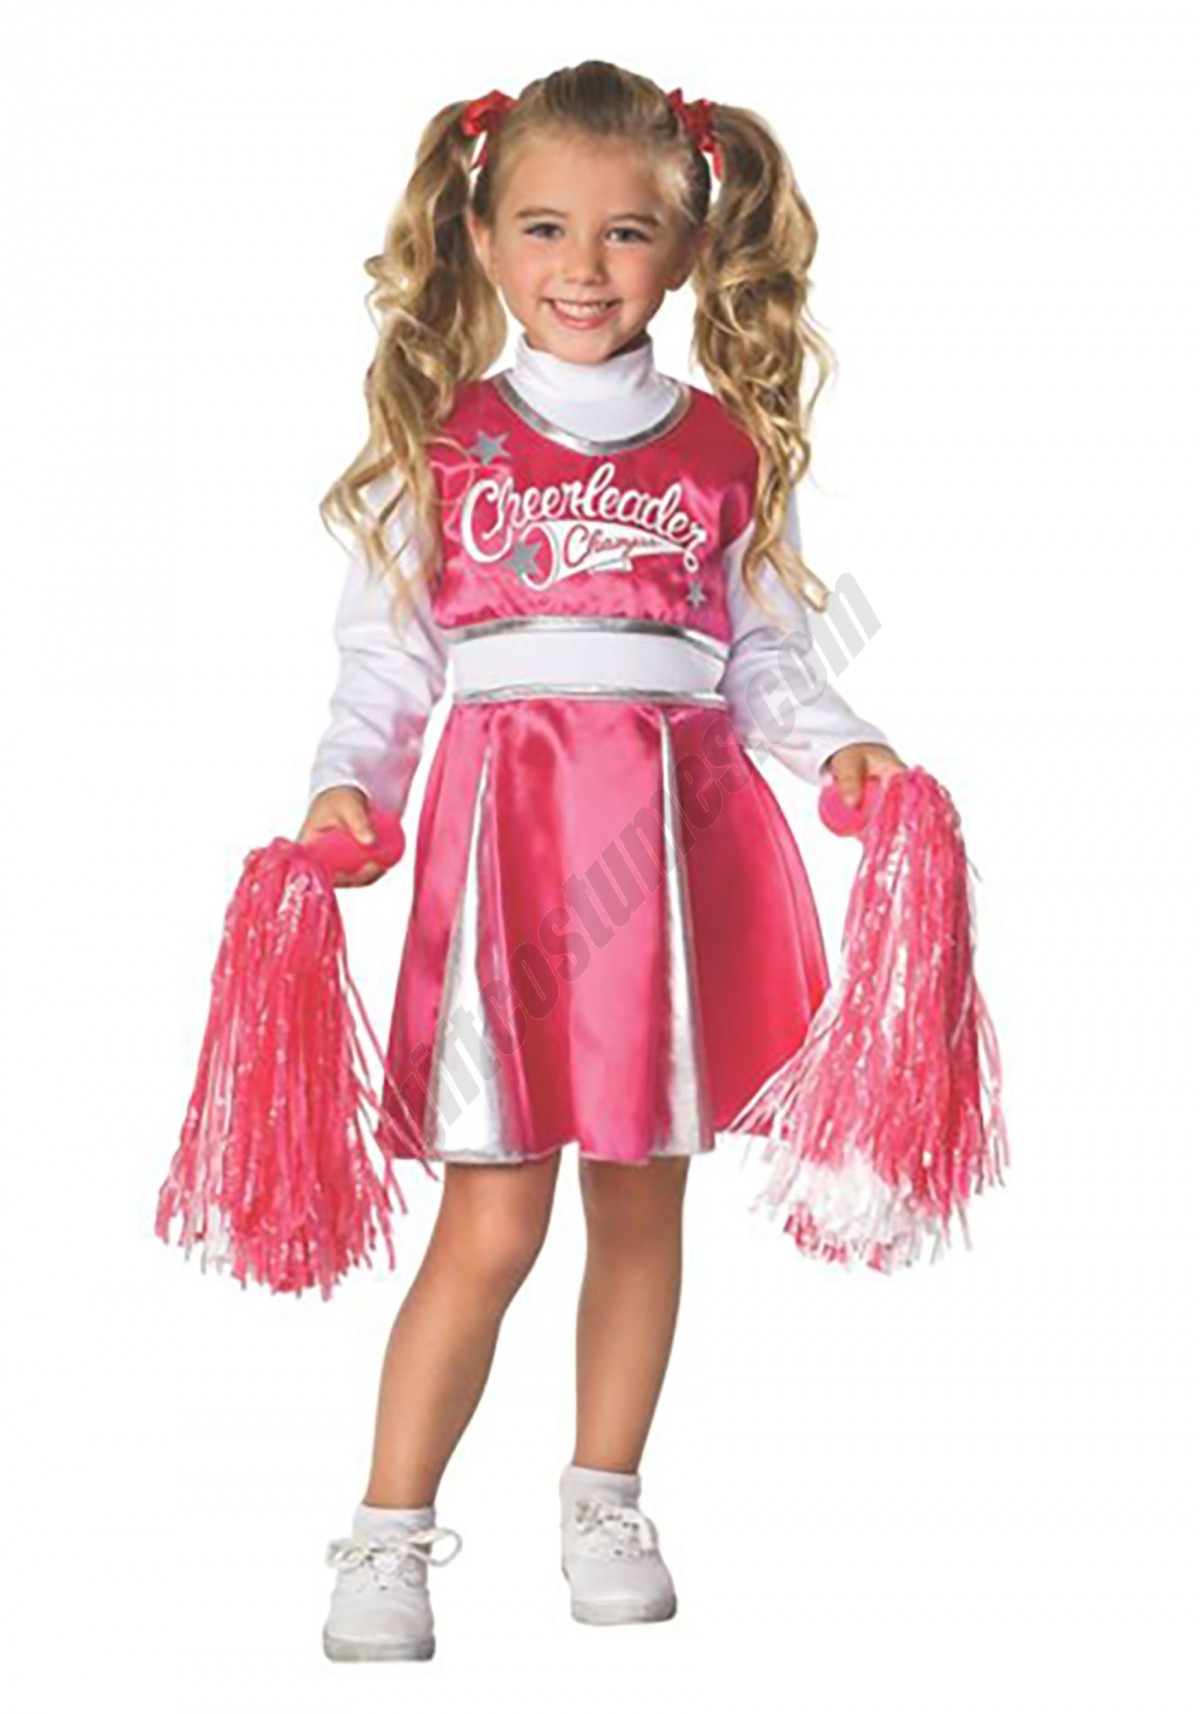 Cheerleader Champ Costume Promotions - -0